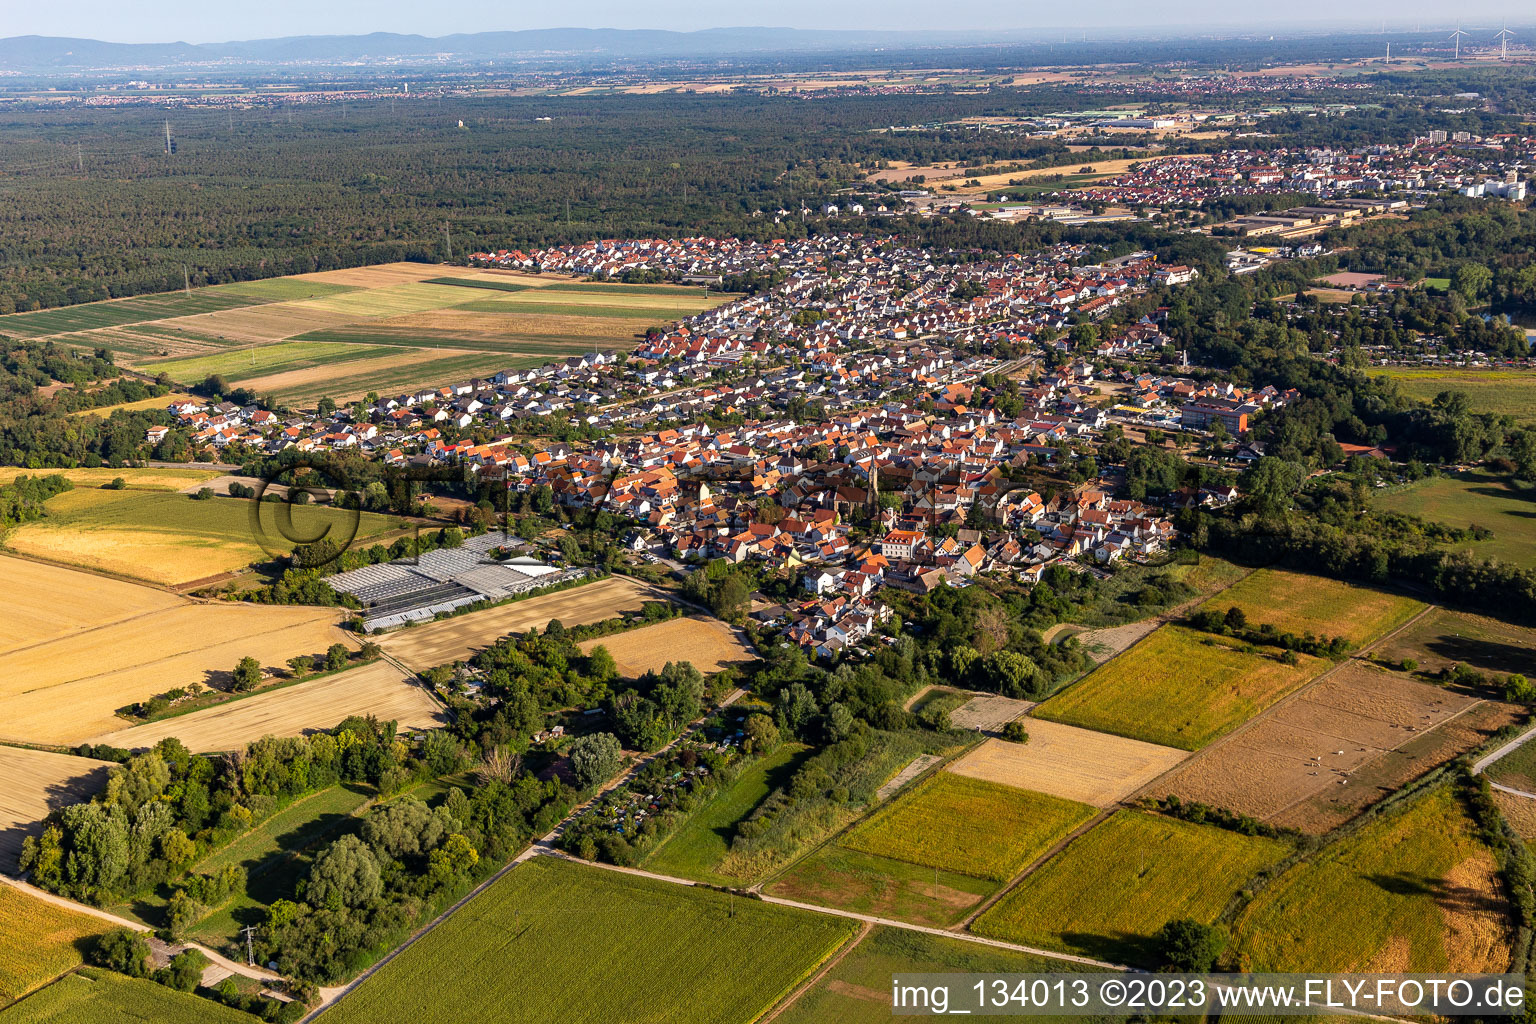 Quartier Sondernheim in Germersheim dans le département Rhénanie-Palatinat, Allemagne vu d'un drone